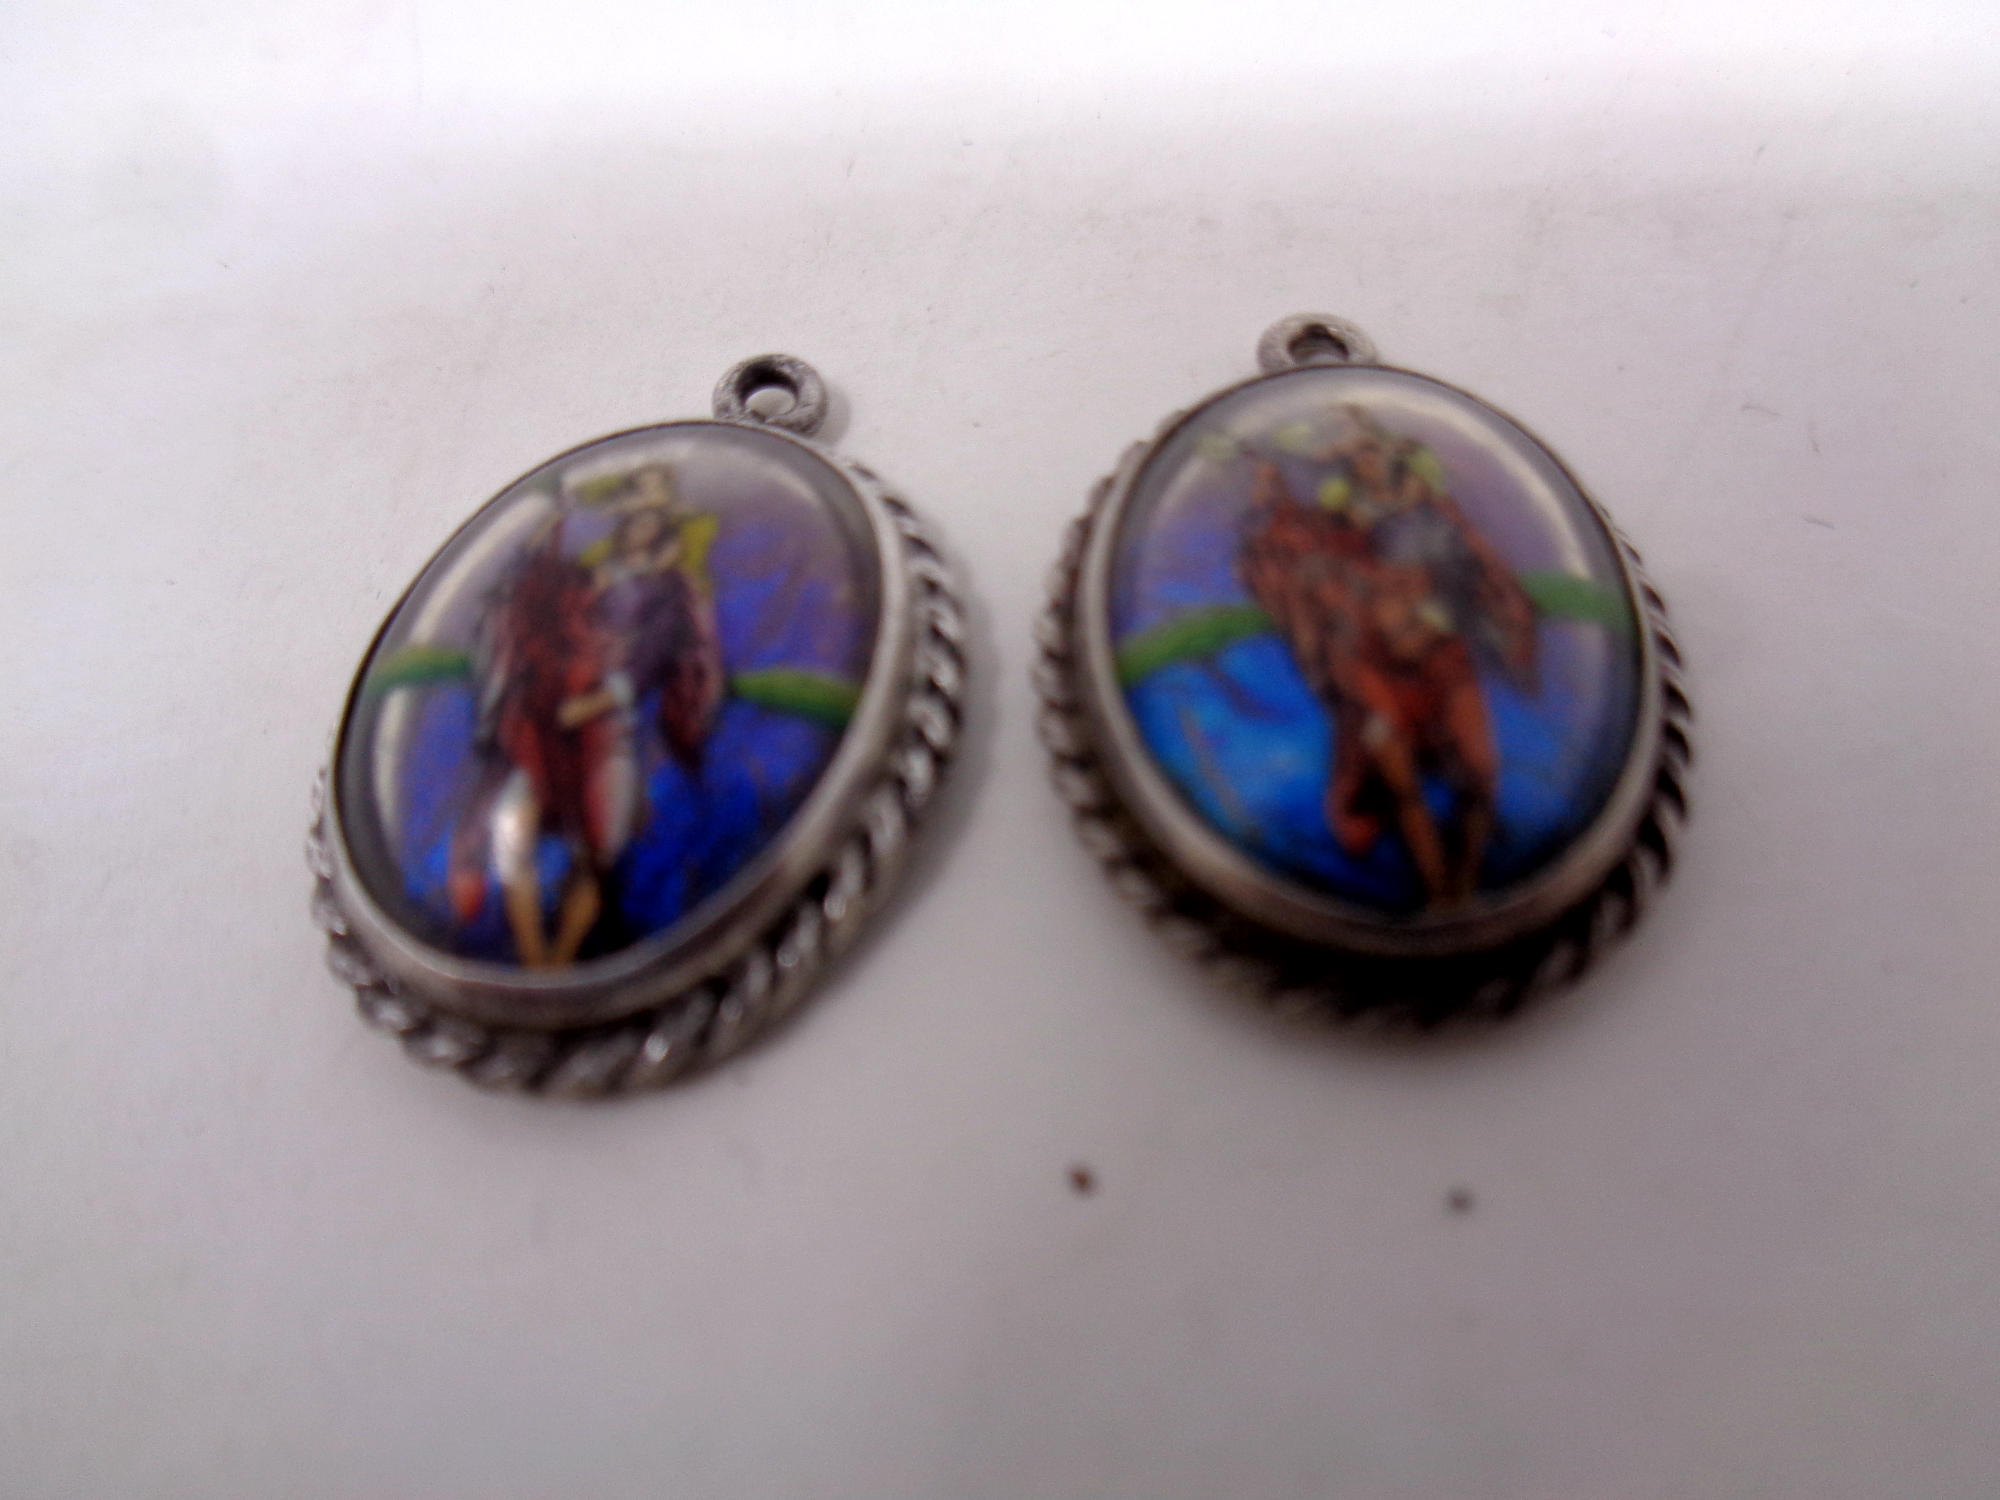 Two silver pendants